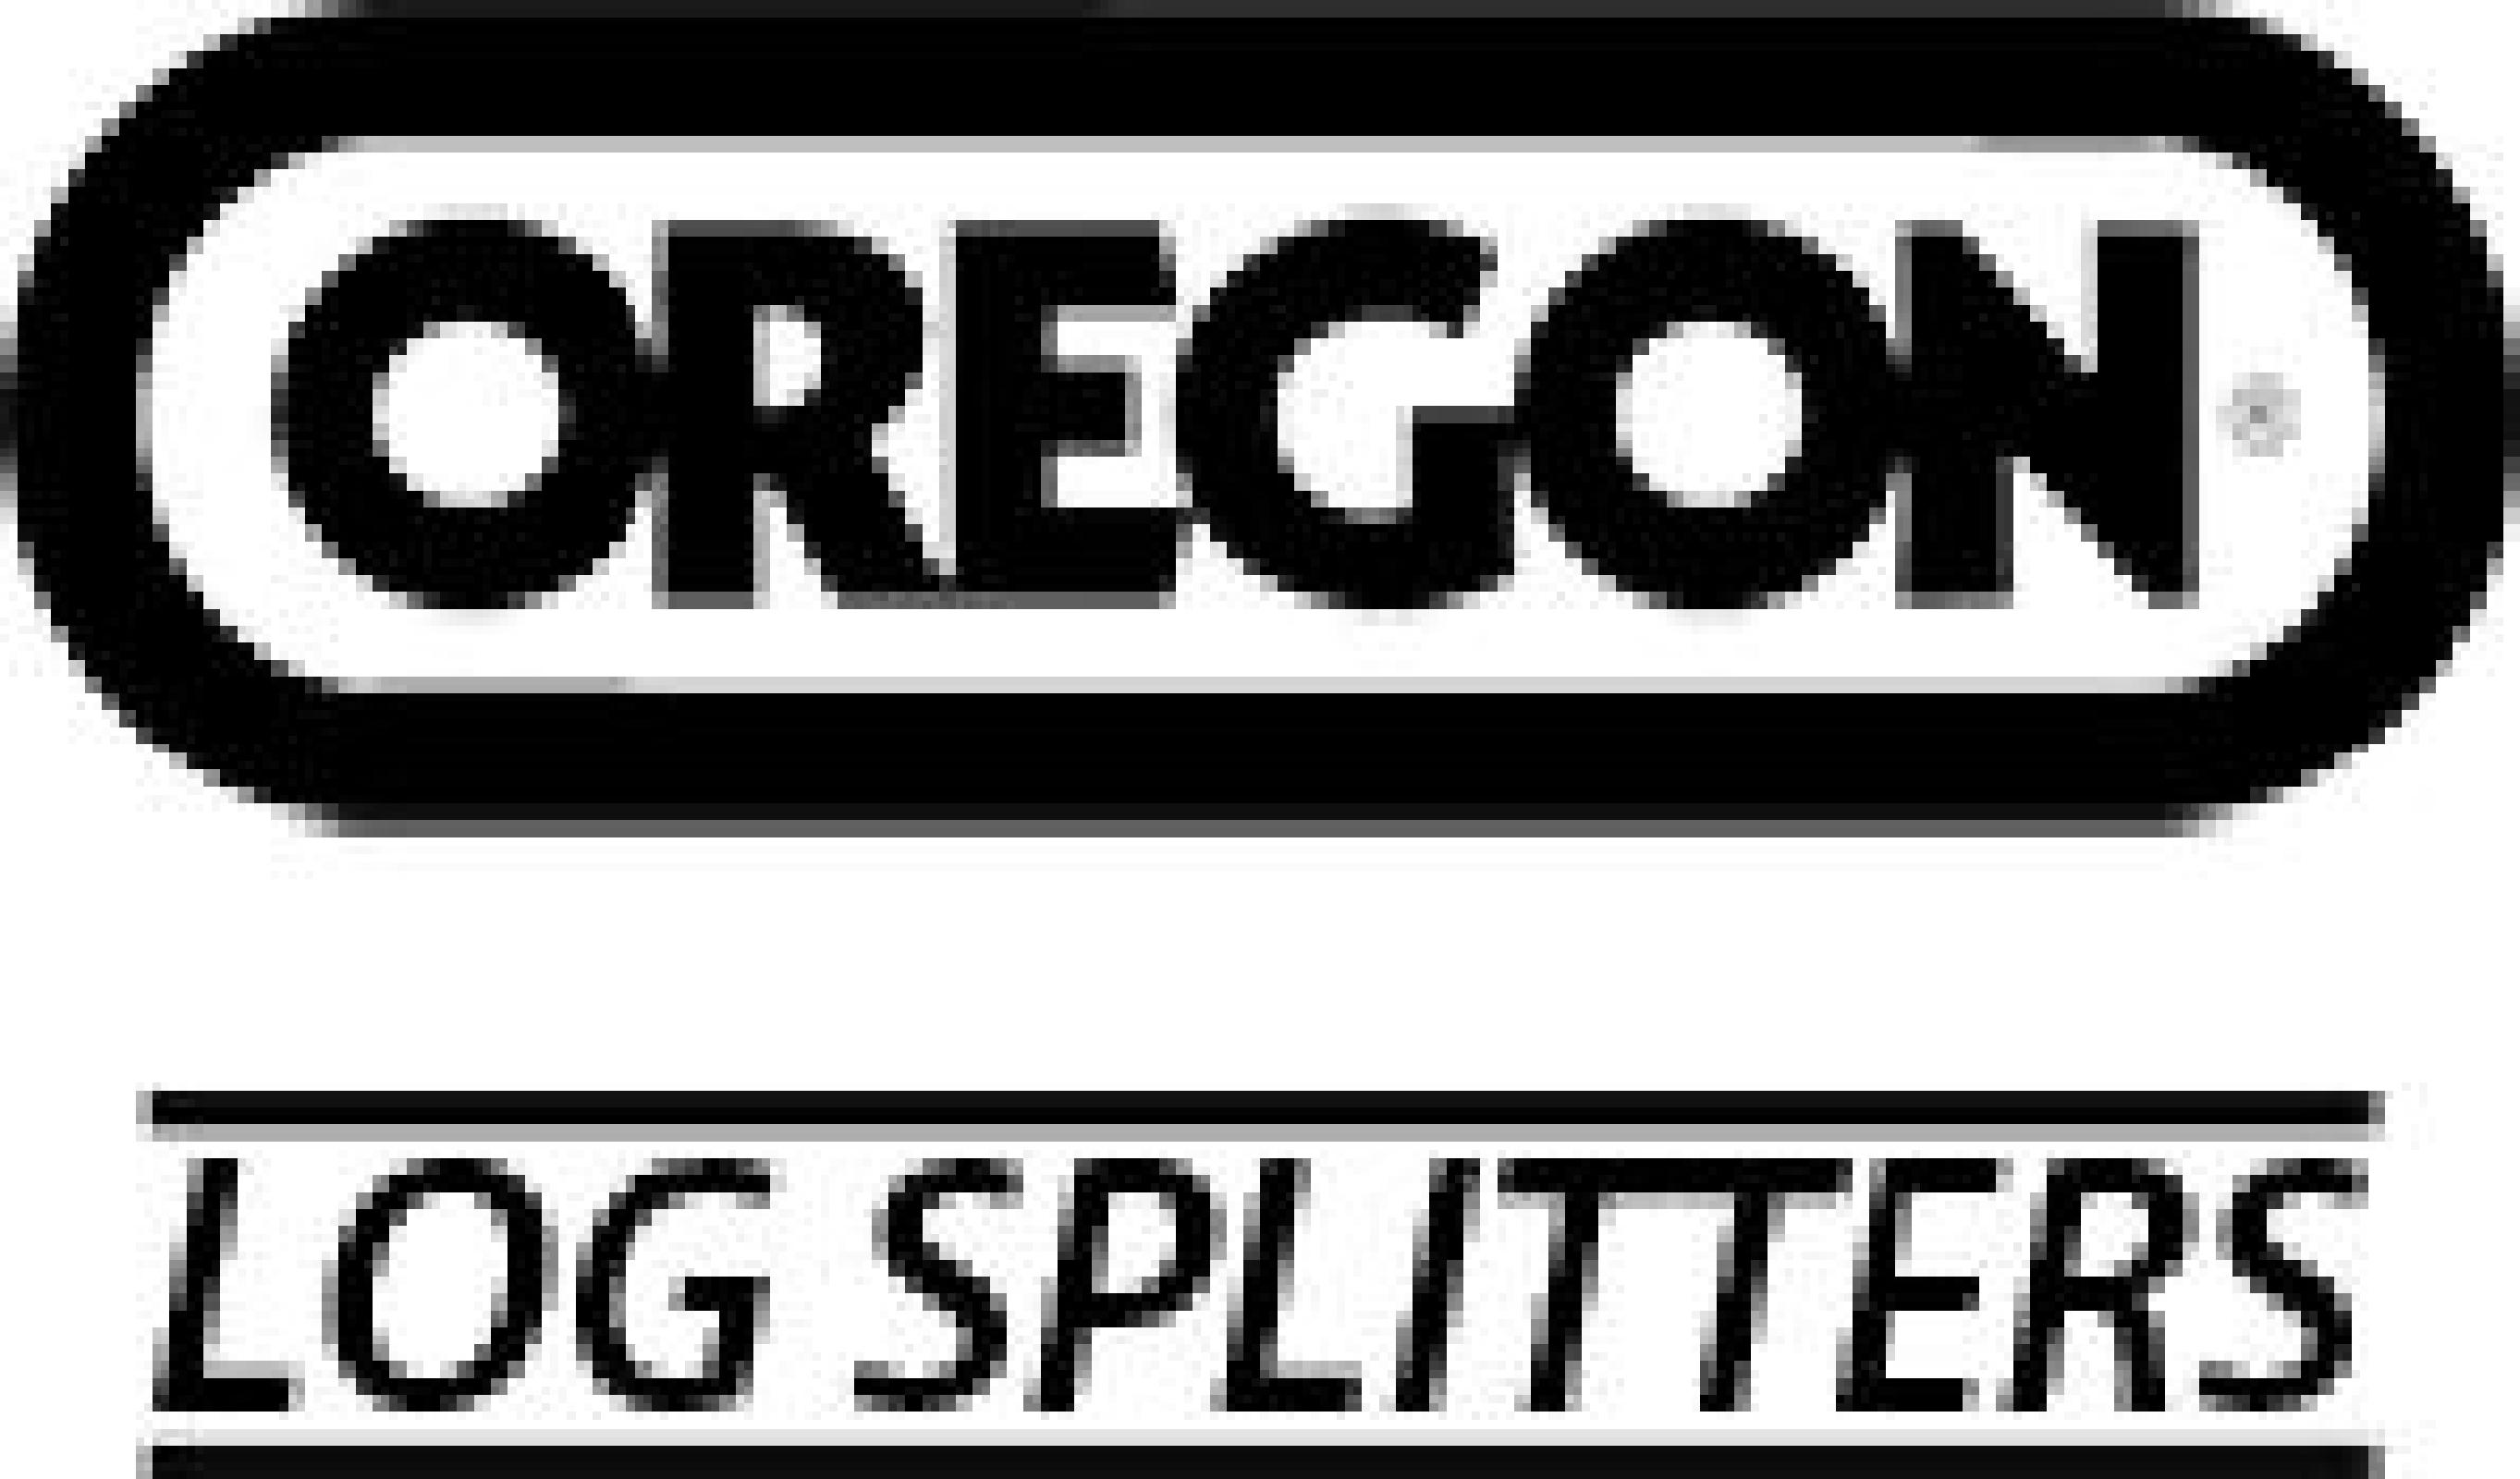 OREGON 16 LITER SPRAYER part# 518769 by Oregon